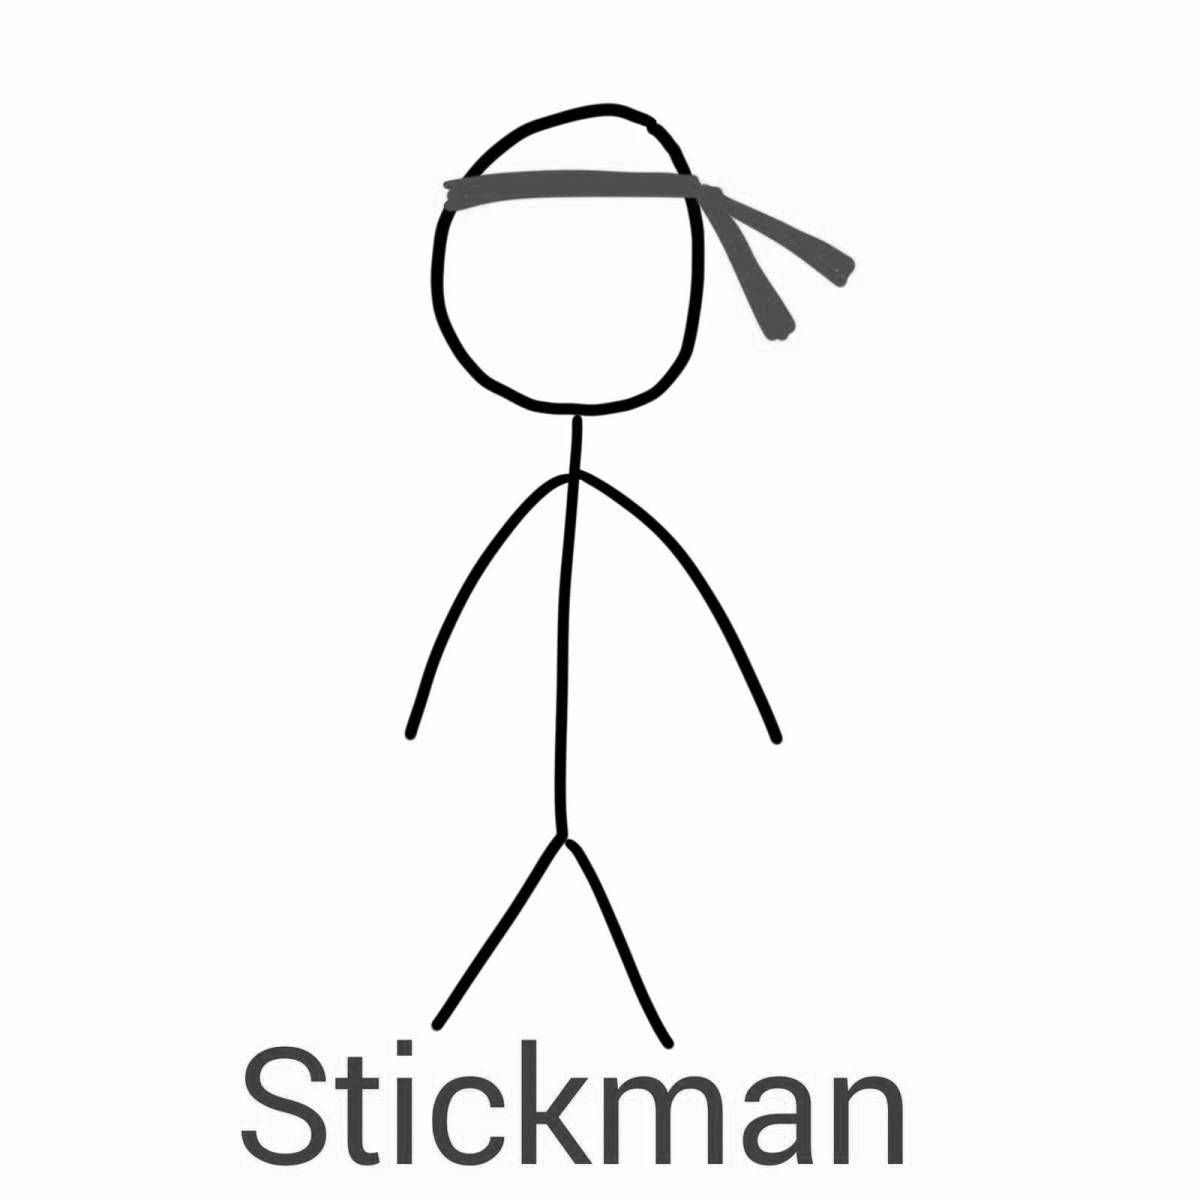 Henry stickman #1